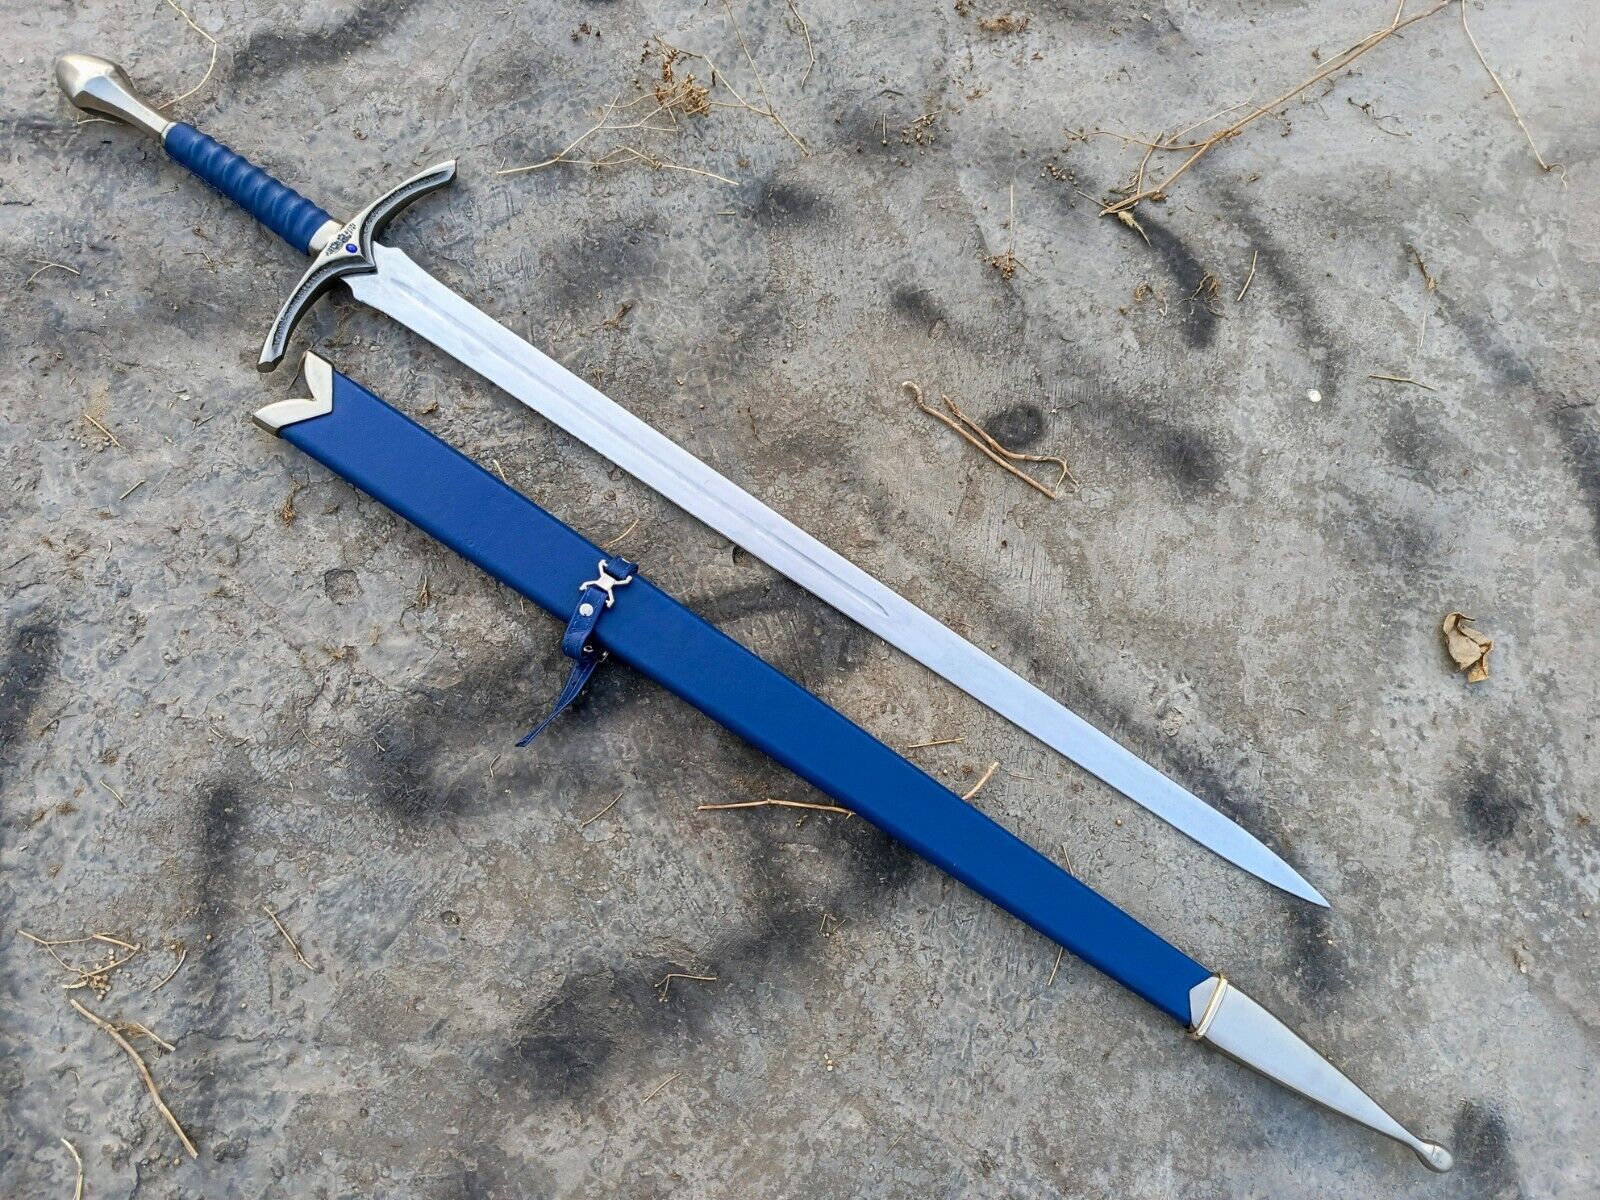 Glamdring Sword of Gandalf, Cosplay Replica Handmade Sword with Scabbard